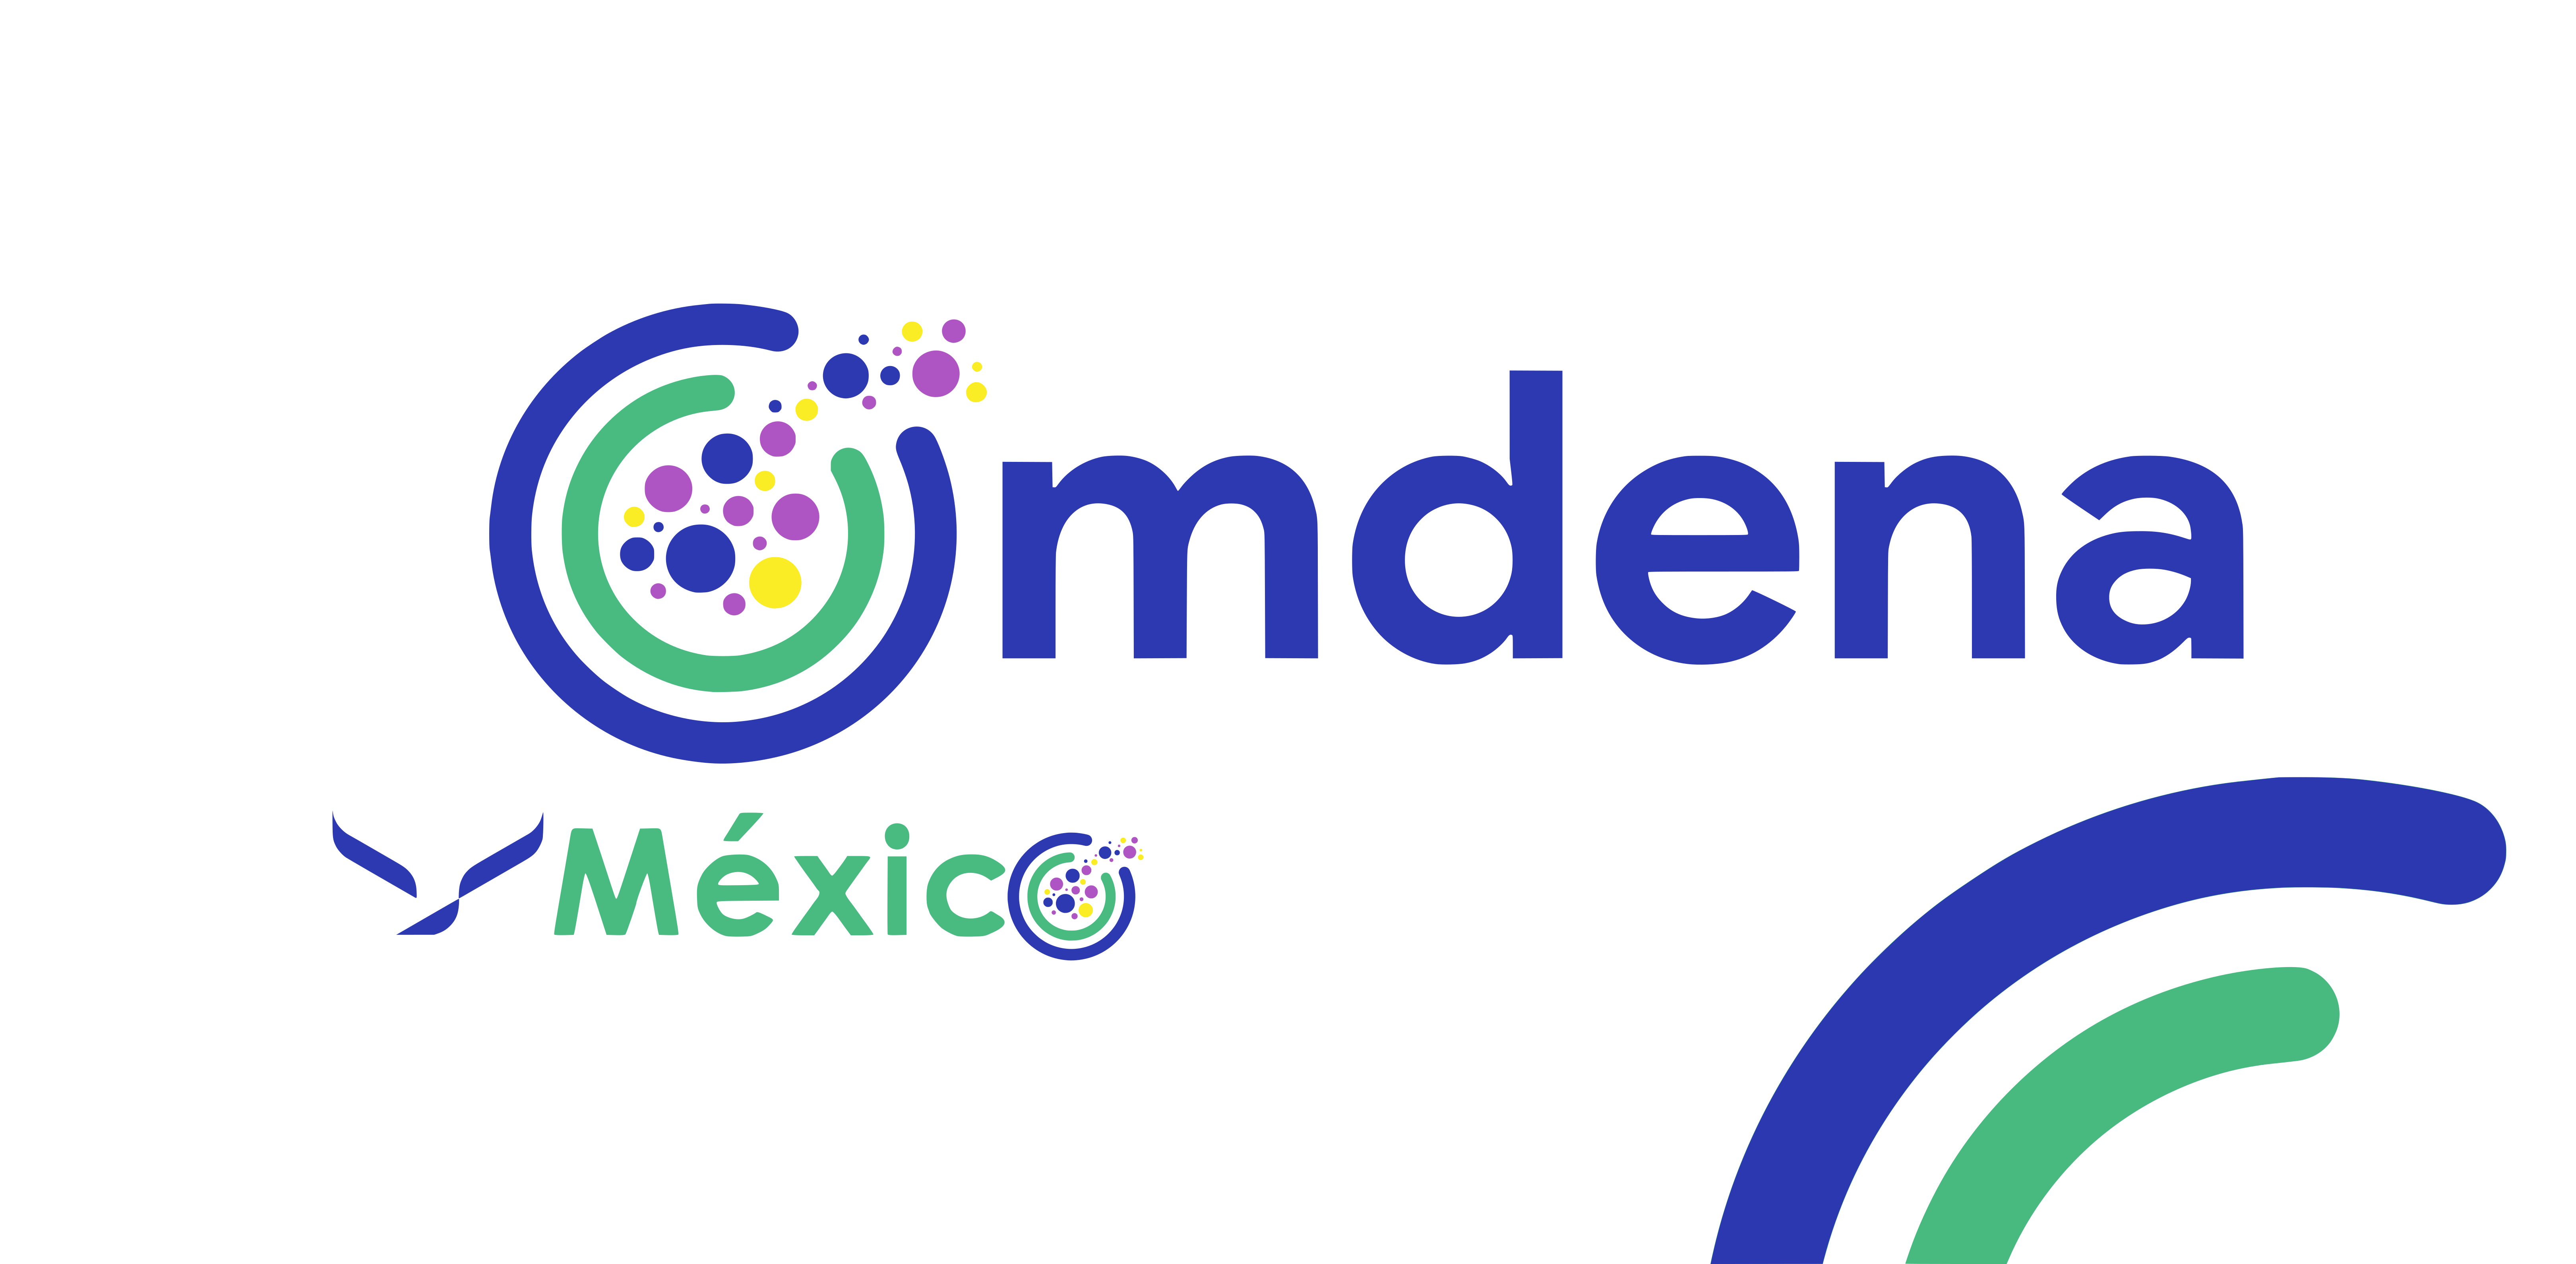 Omdena México